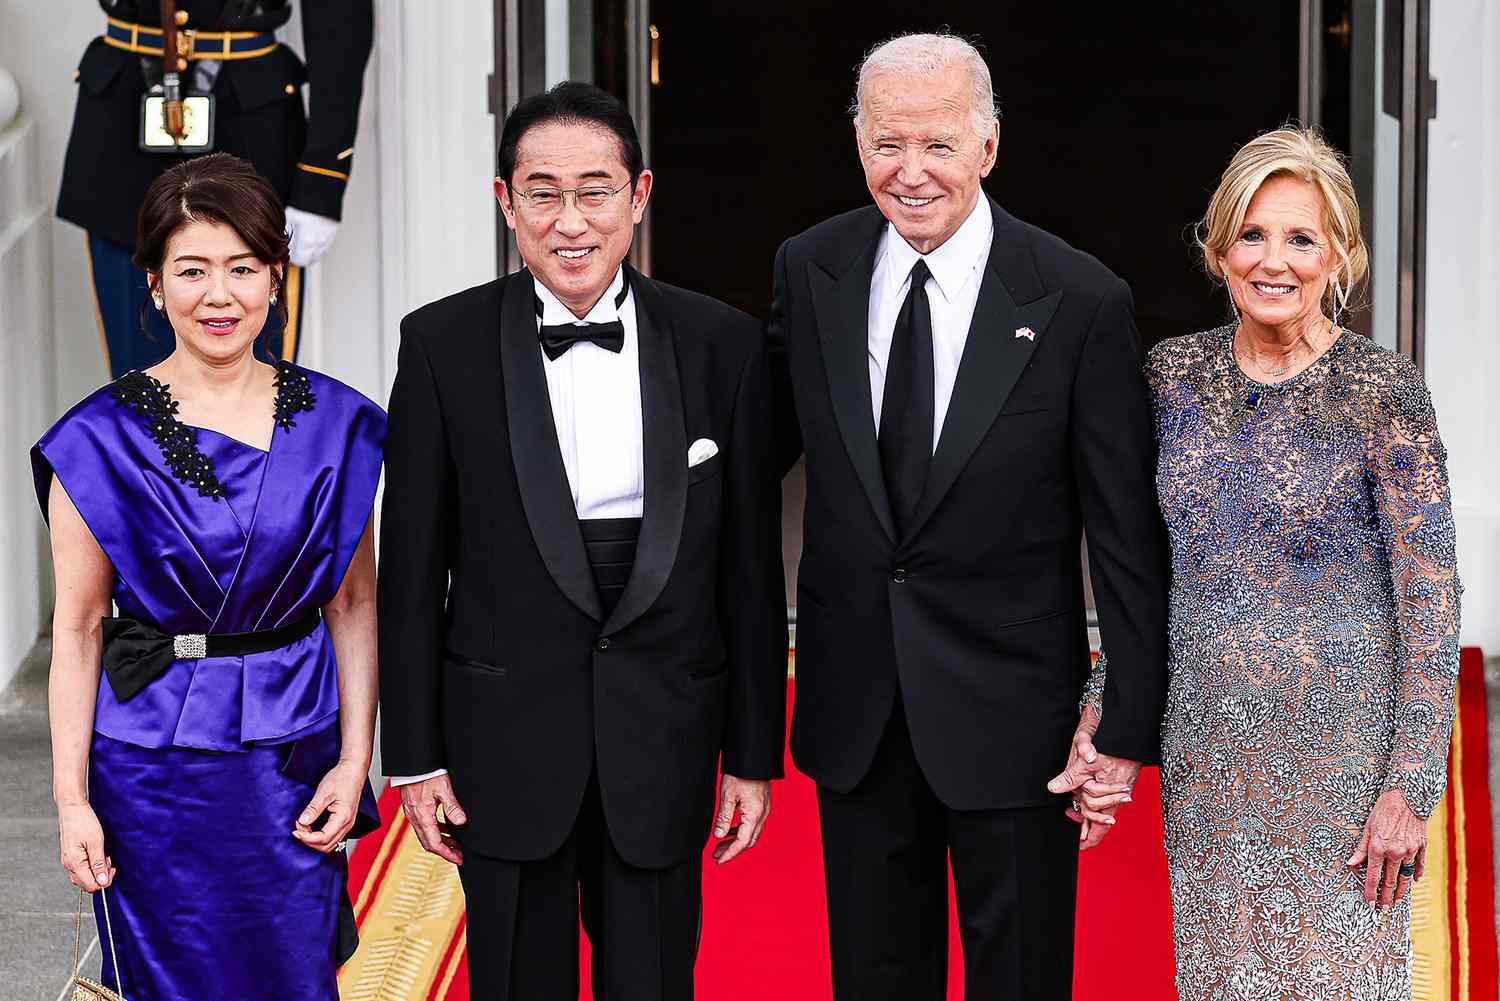 US President Joe Biden, second right, and First Lady Jill Biden, right, welcome Fumio Kishida, Japan's prime minister, second left, and his wife Yuko Kishida